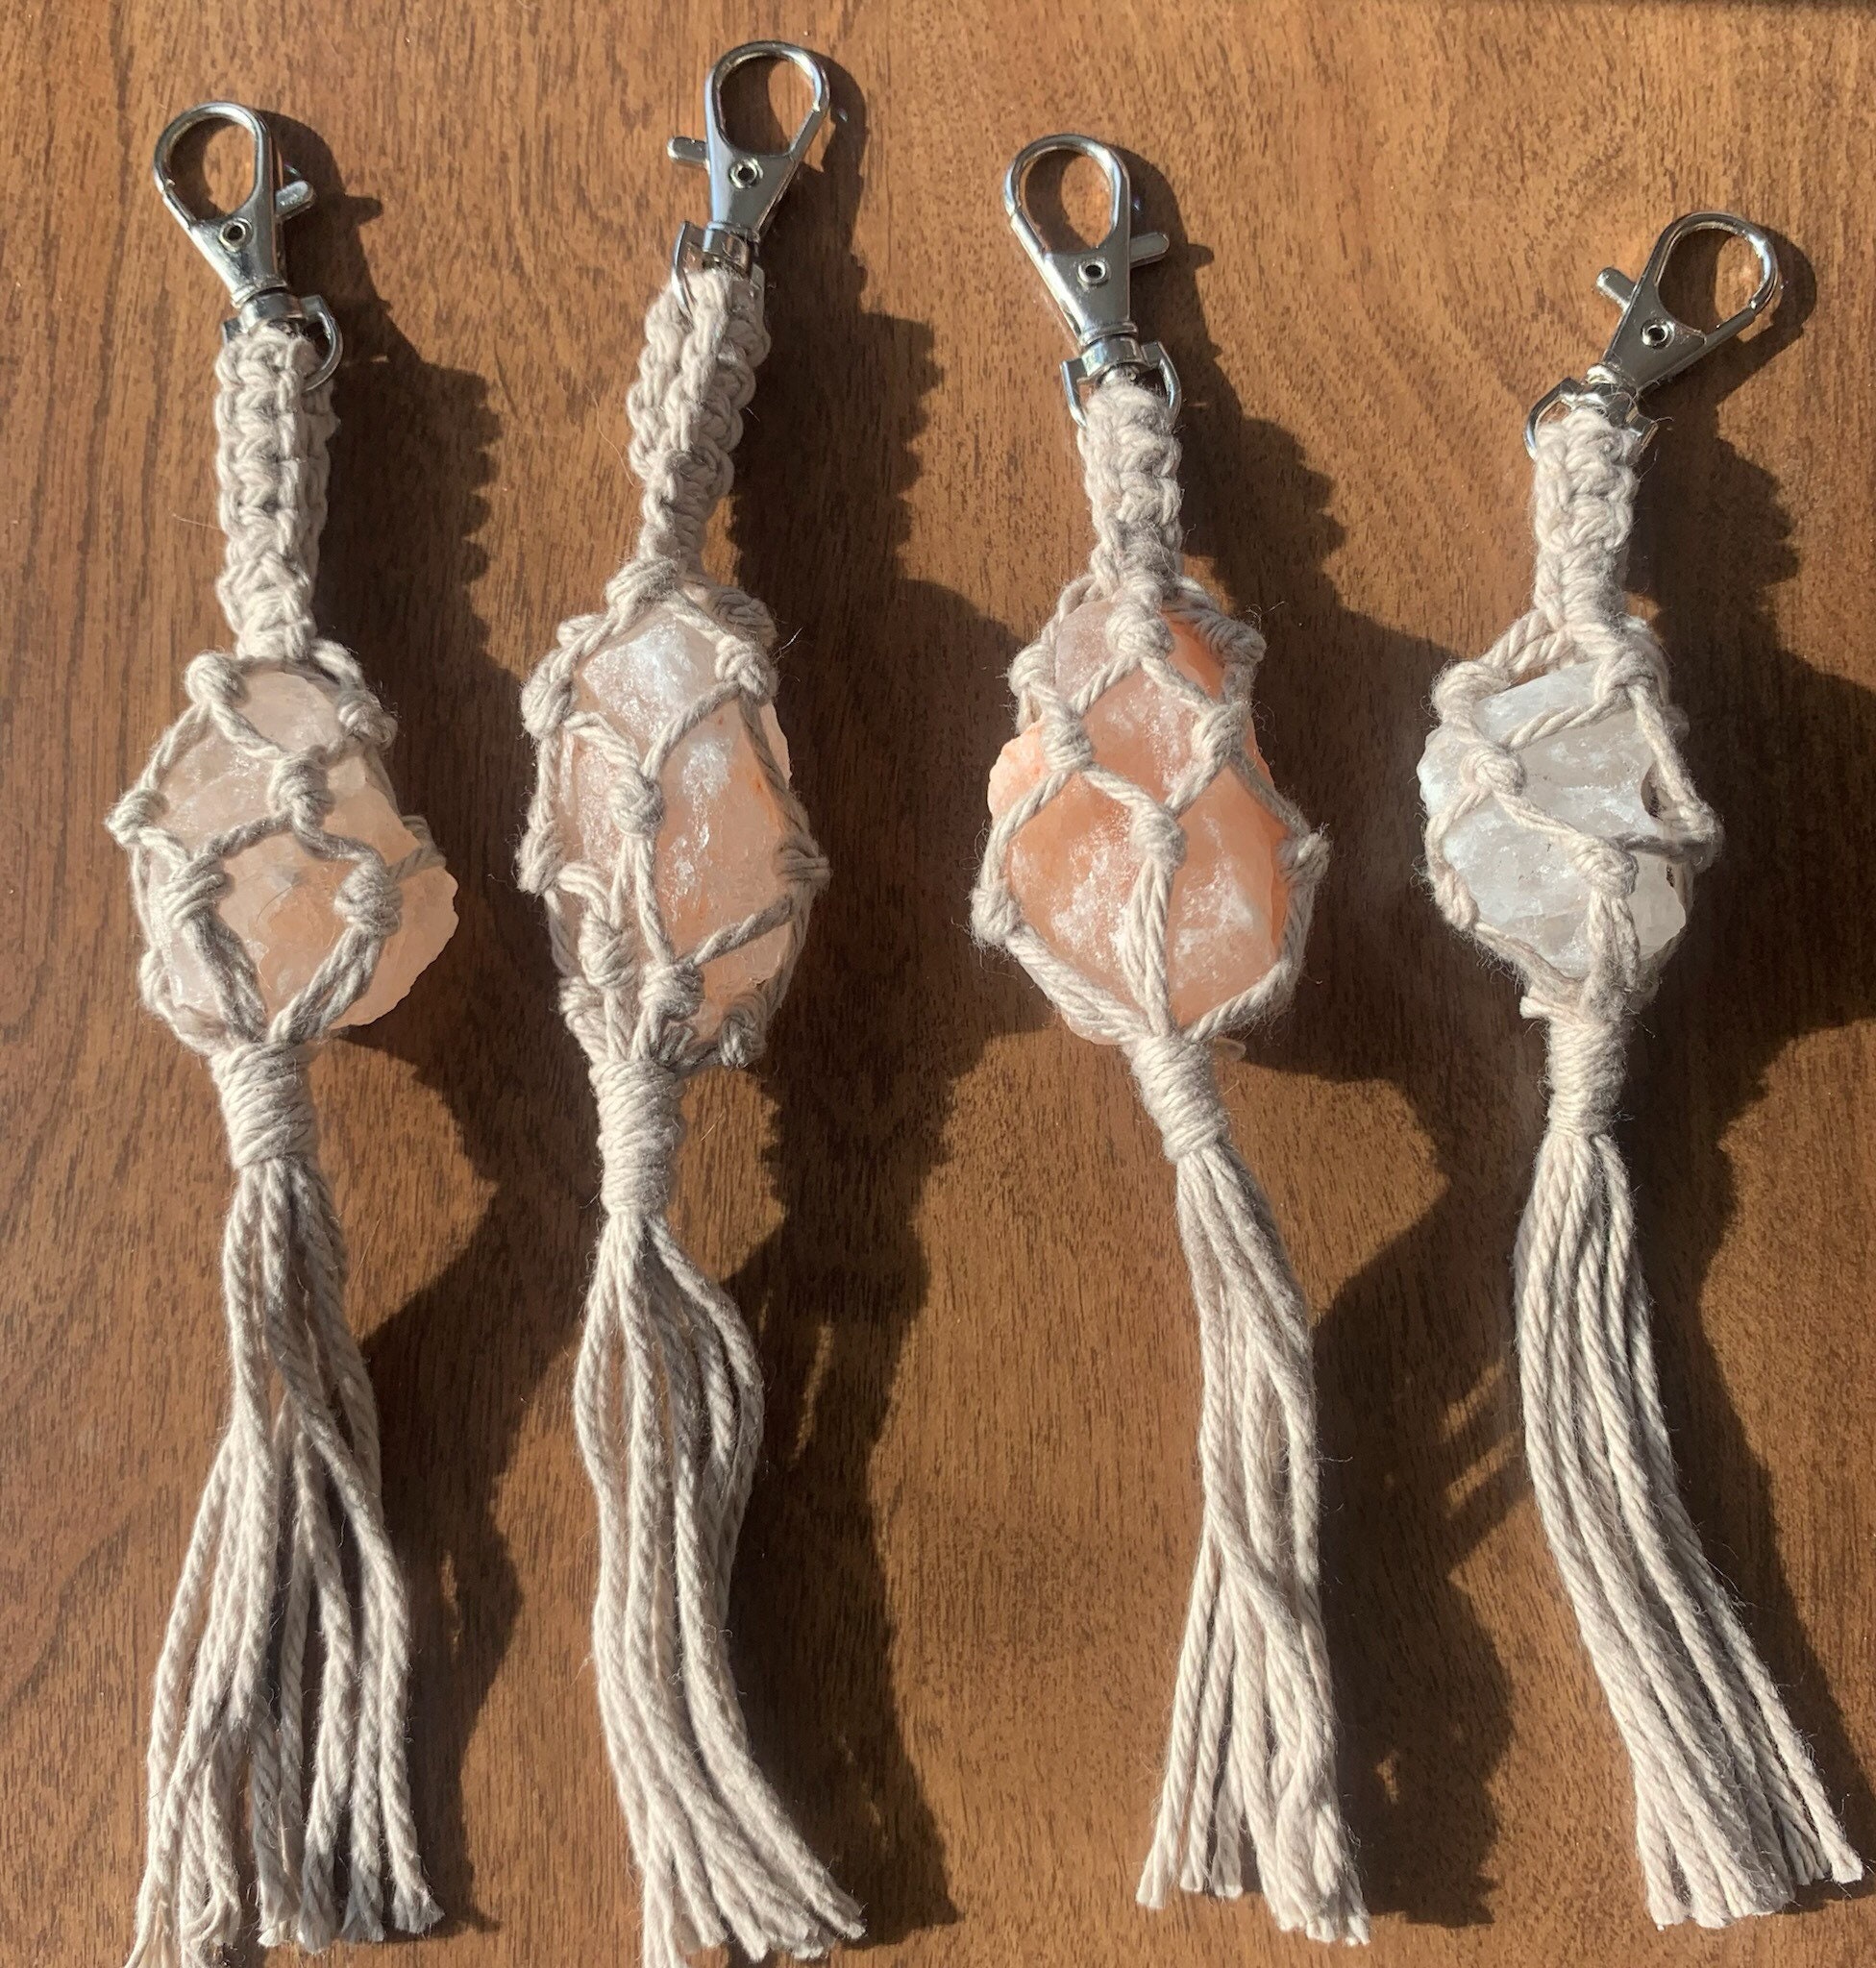 DIY Macrame Cage Crystal Holder Necklace Stone Holder Macrame Pendant –  GemMartUSA